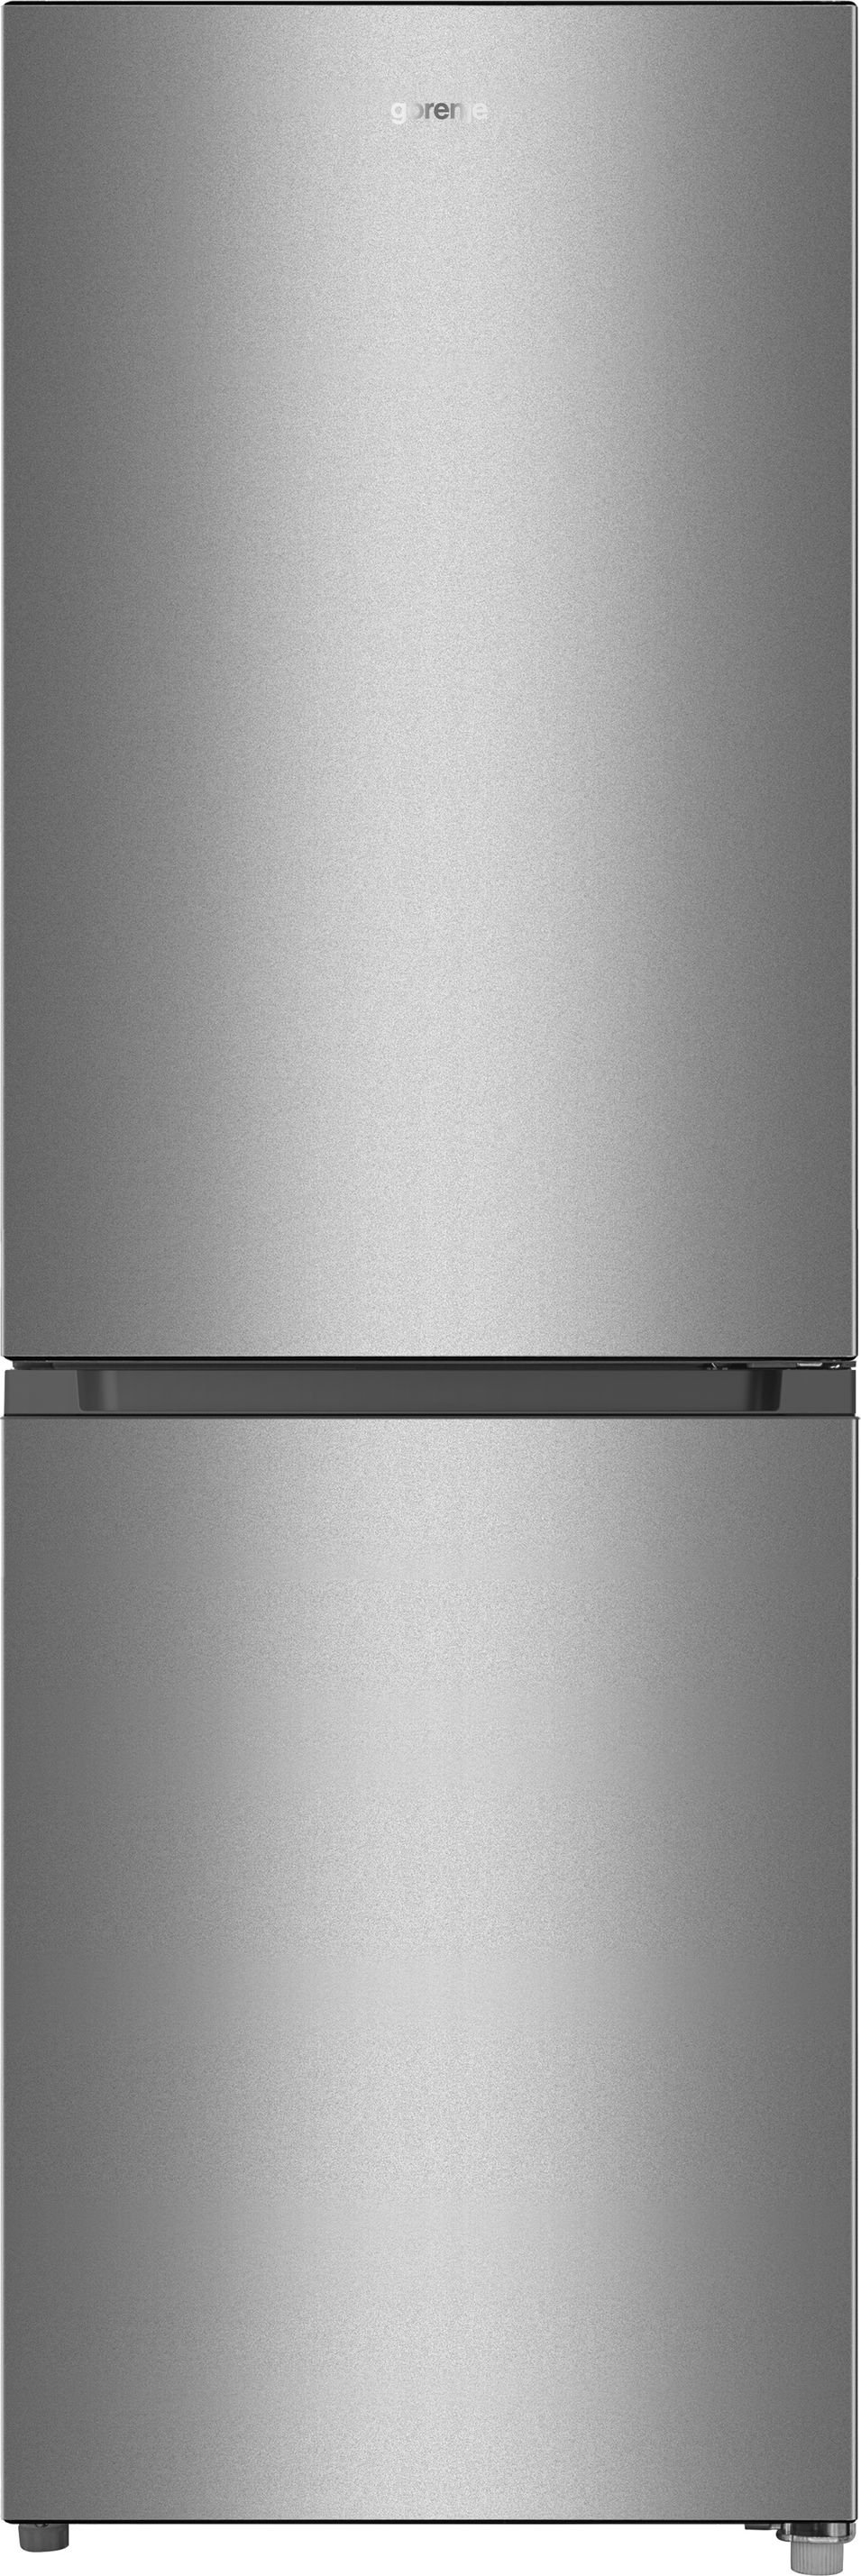 Combine frigorifice - Combina frigorifica  Gorenje RK4161PS4,
Argint,3 rafturi,39 dB,
Fara display